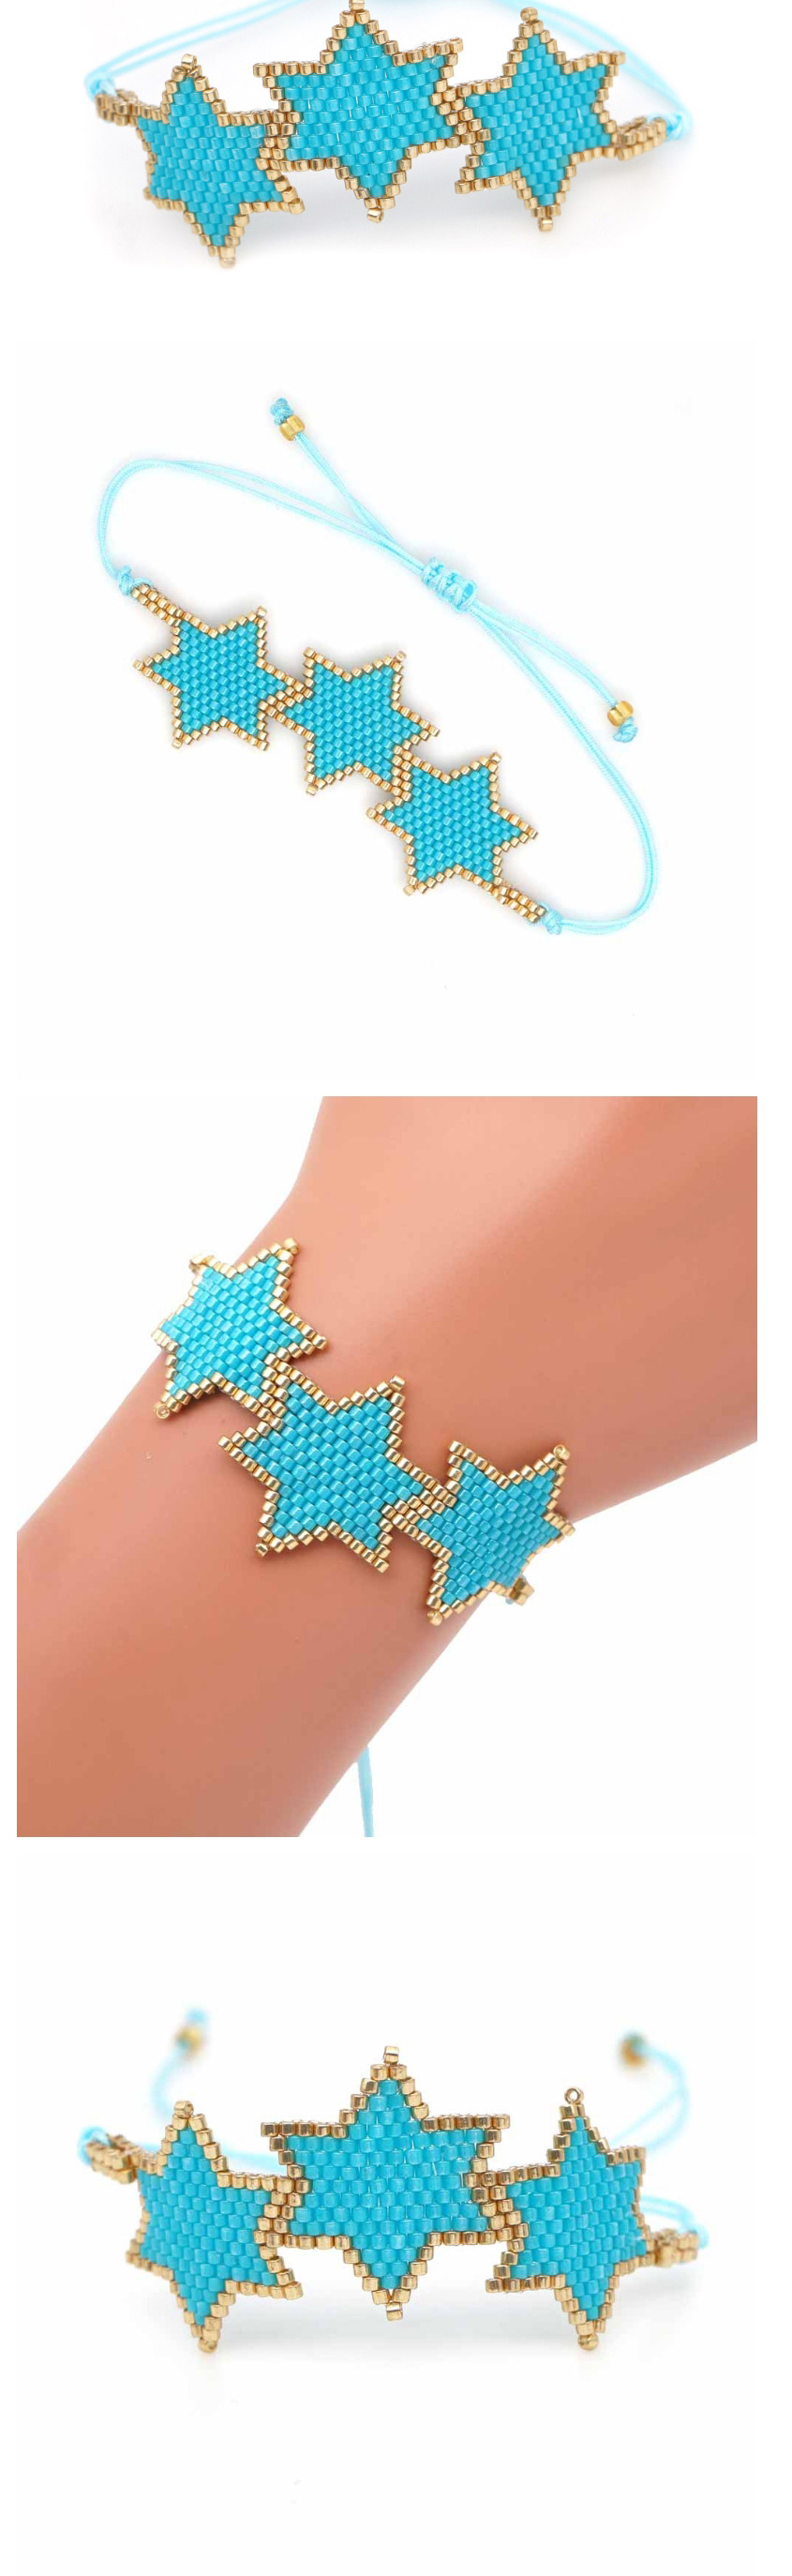 Fashion Black Braided Five-pointed Star Pattern Bracelet,Fashion Bracelets